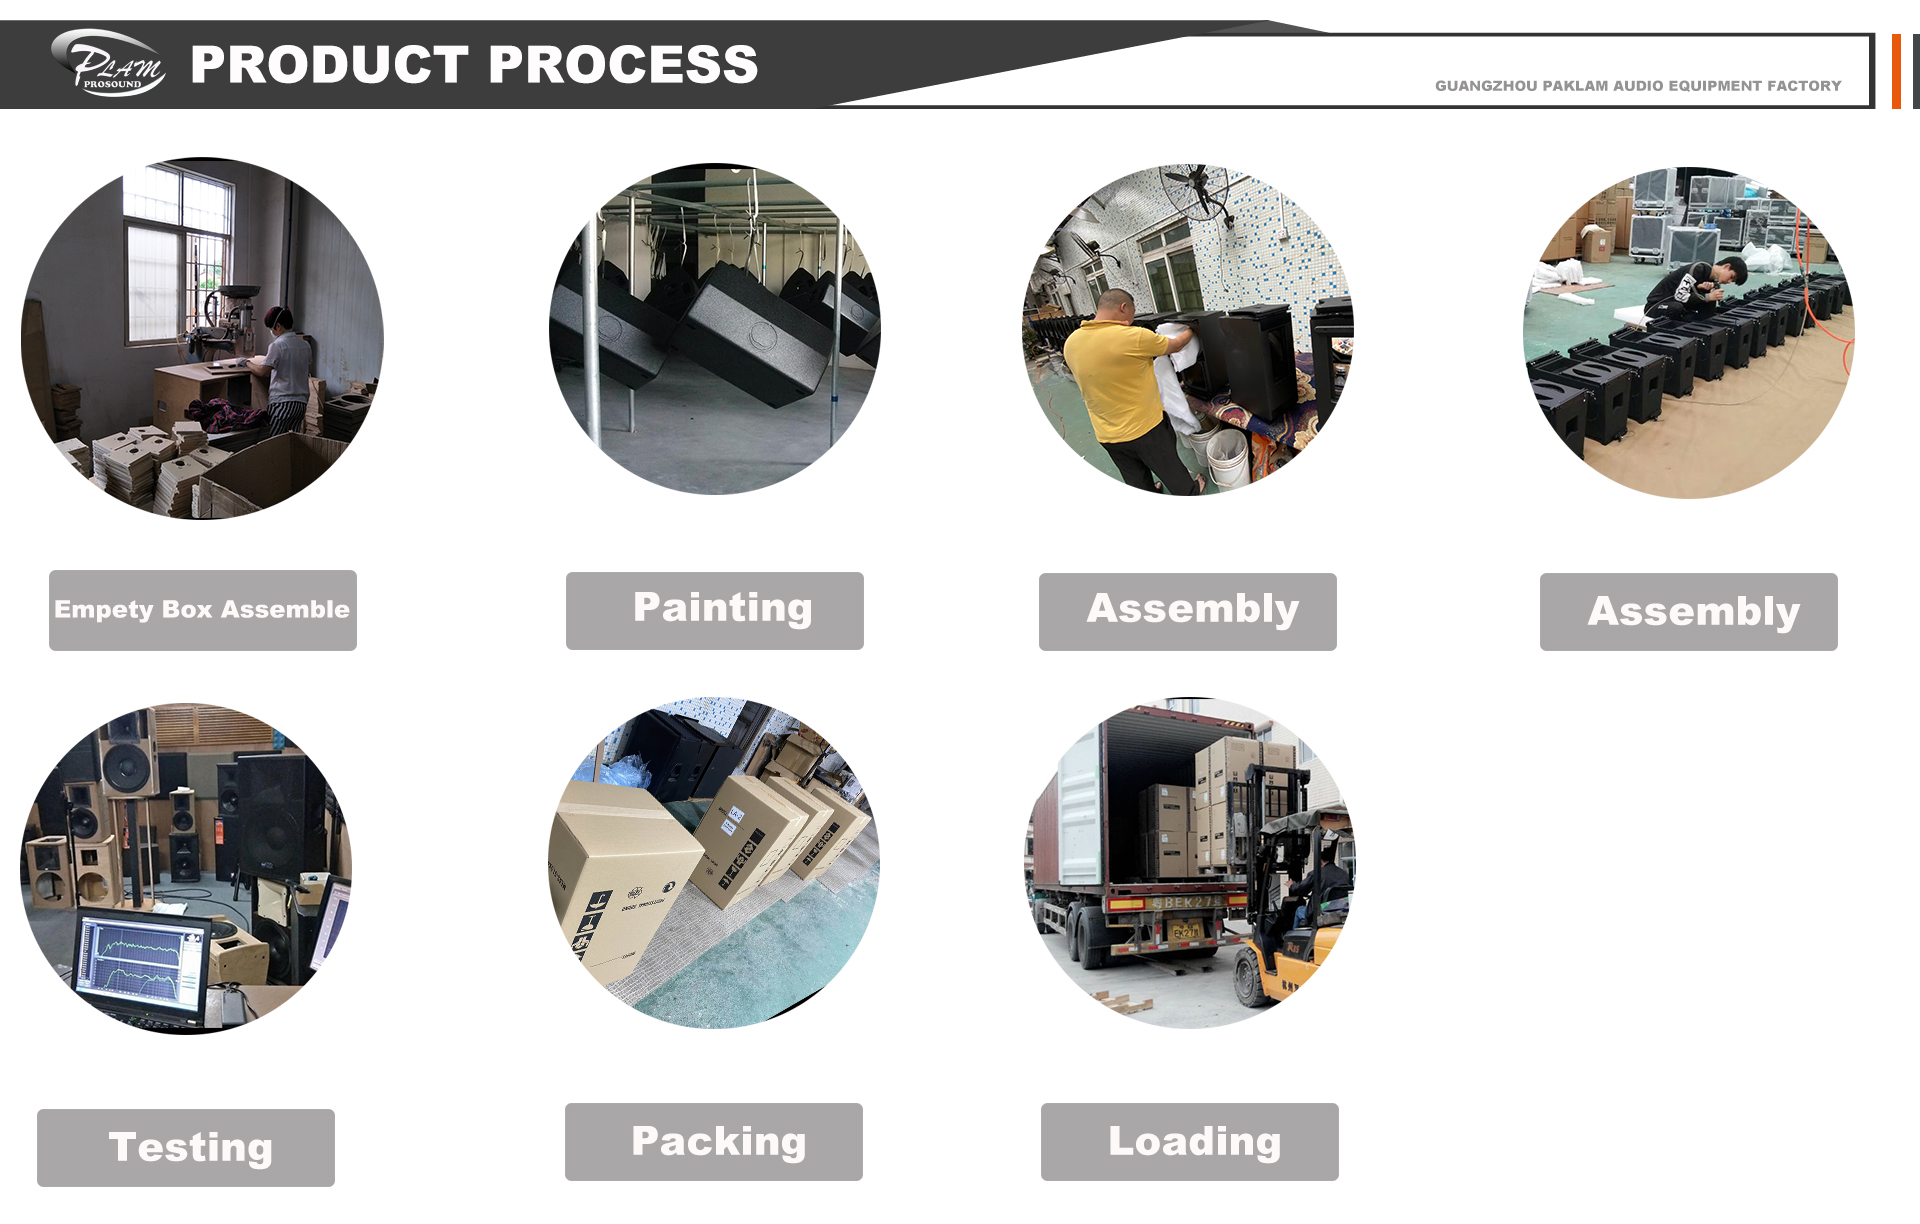 Speaker product process